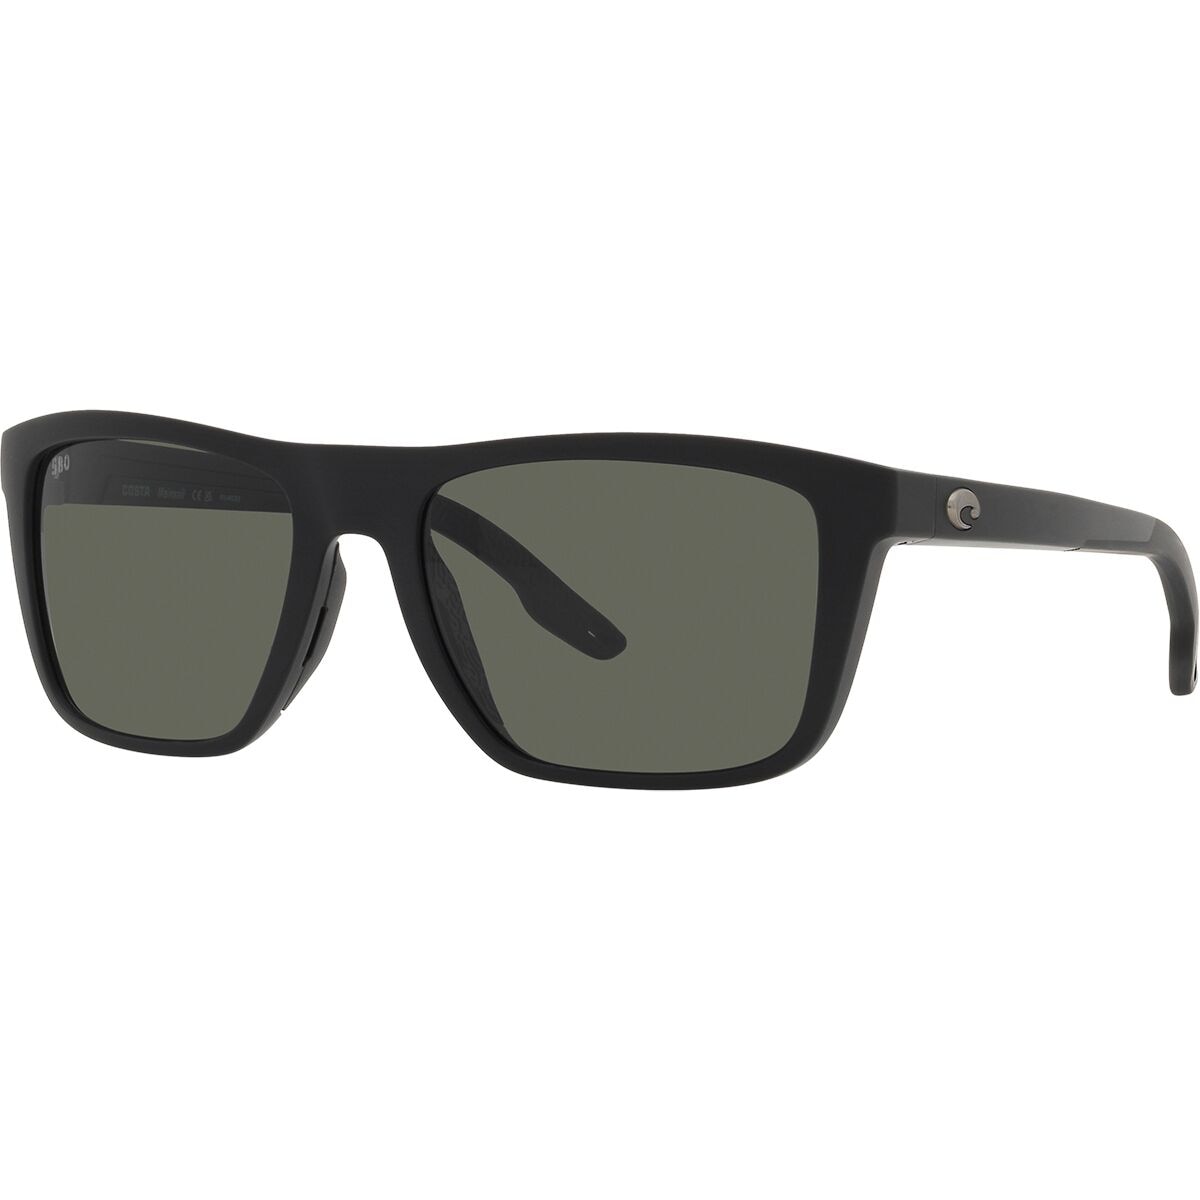 Costa Mainsail 580G Sunglasses